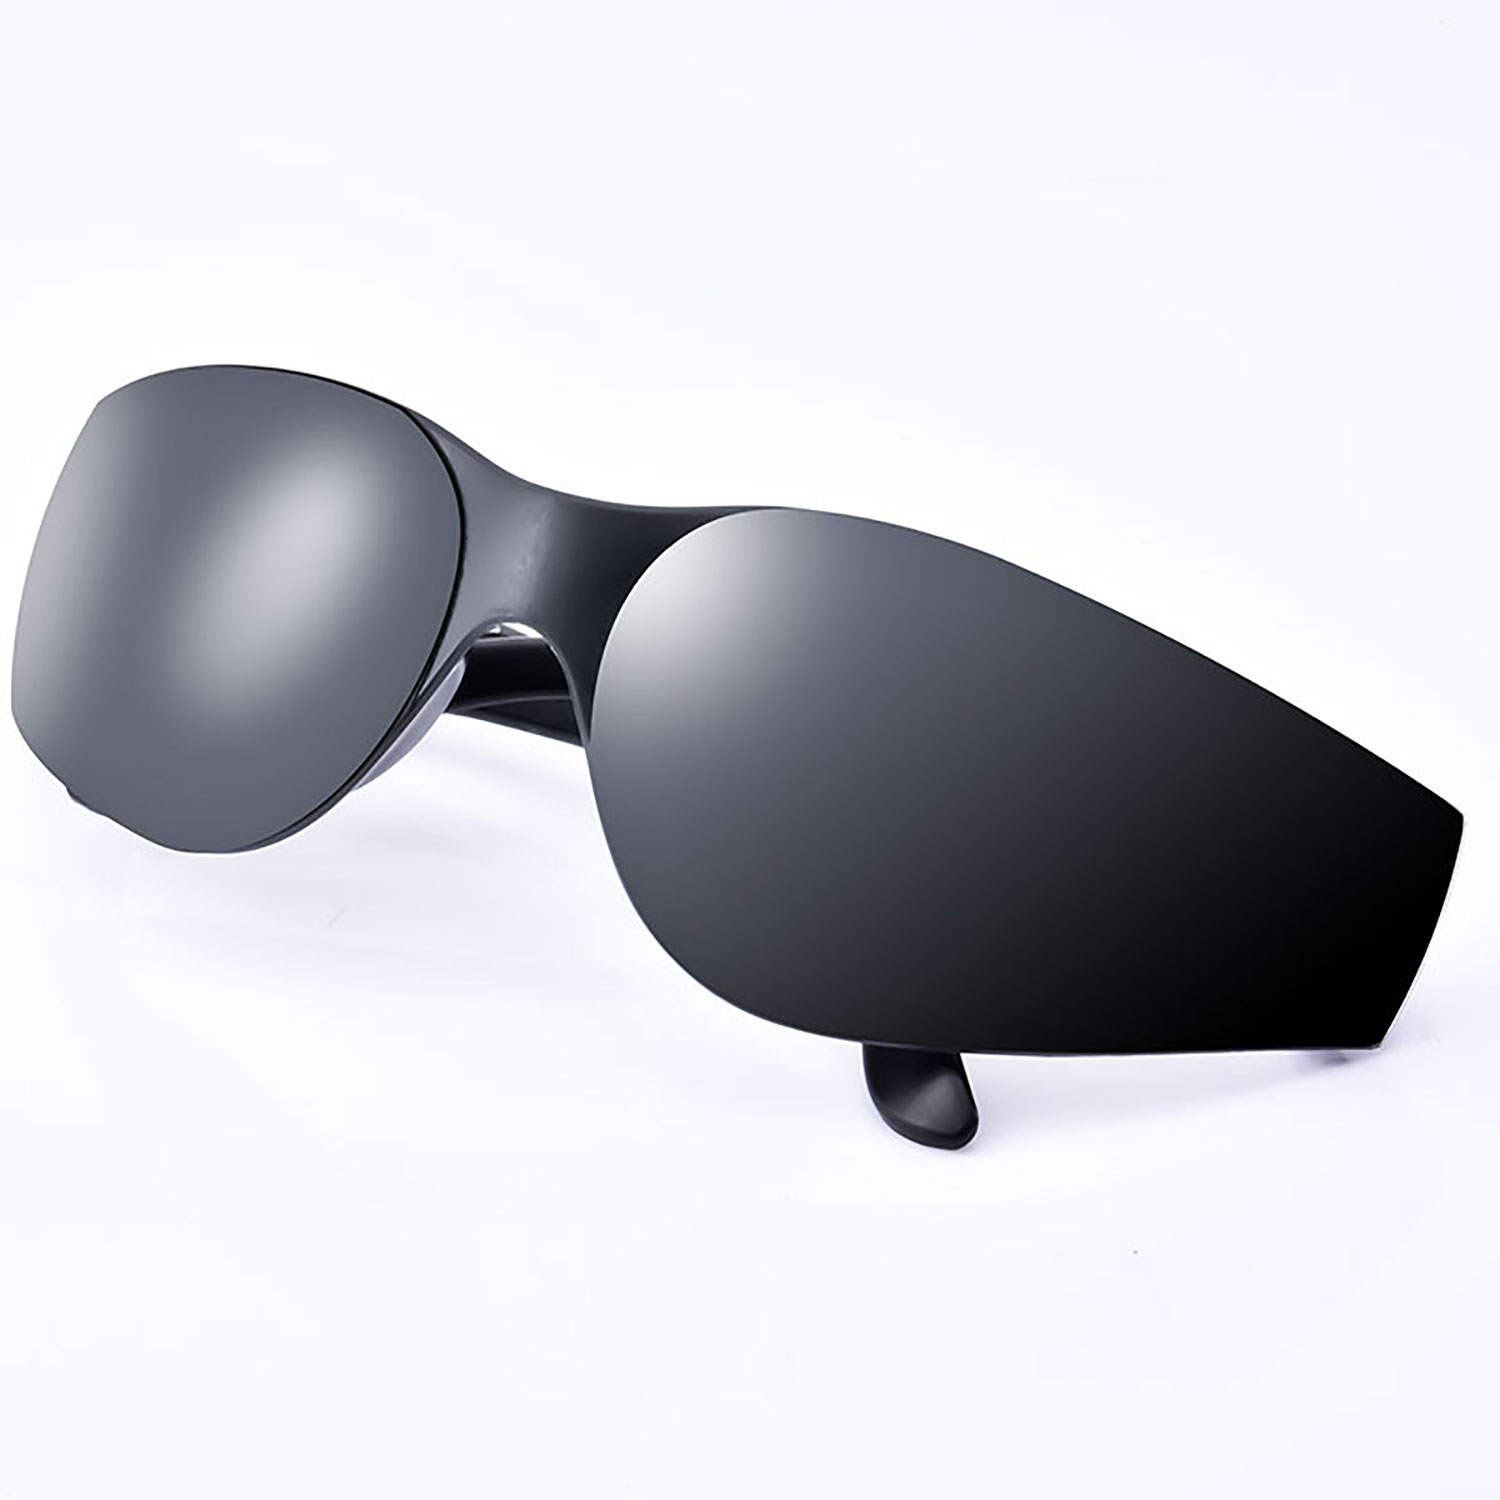 Ready Stock Protective Sunglasses SG001 Black